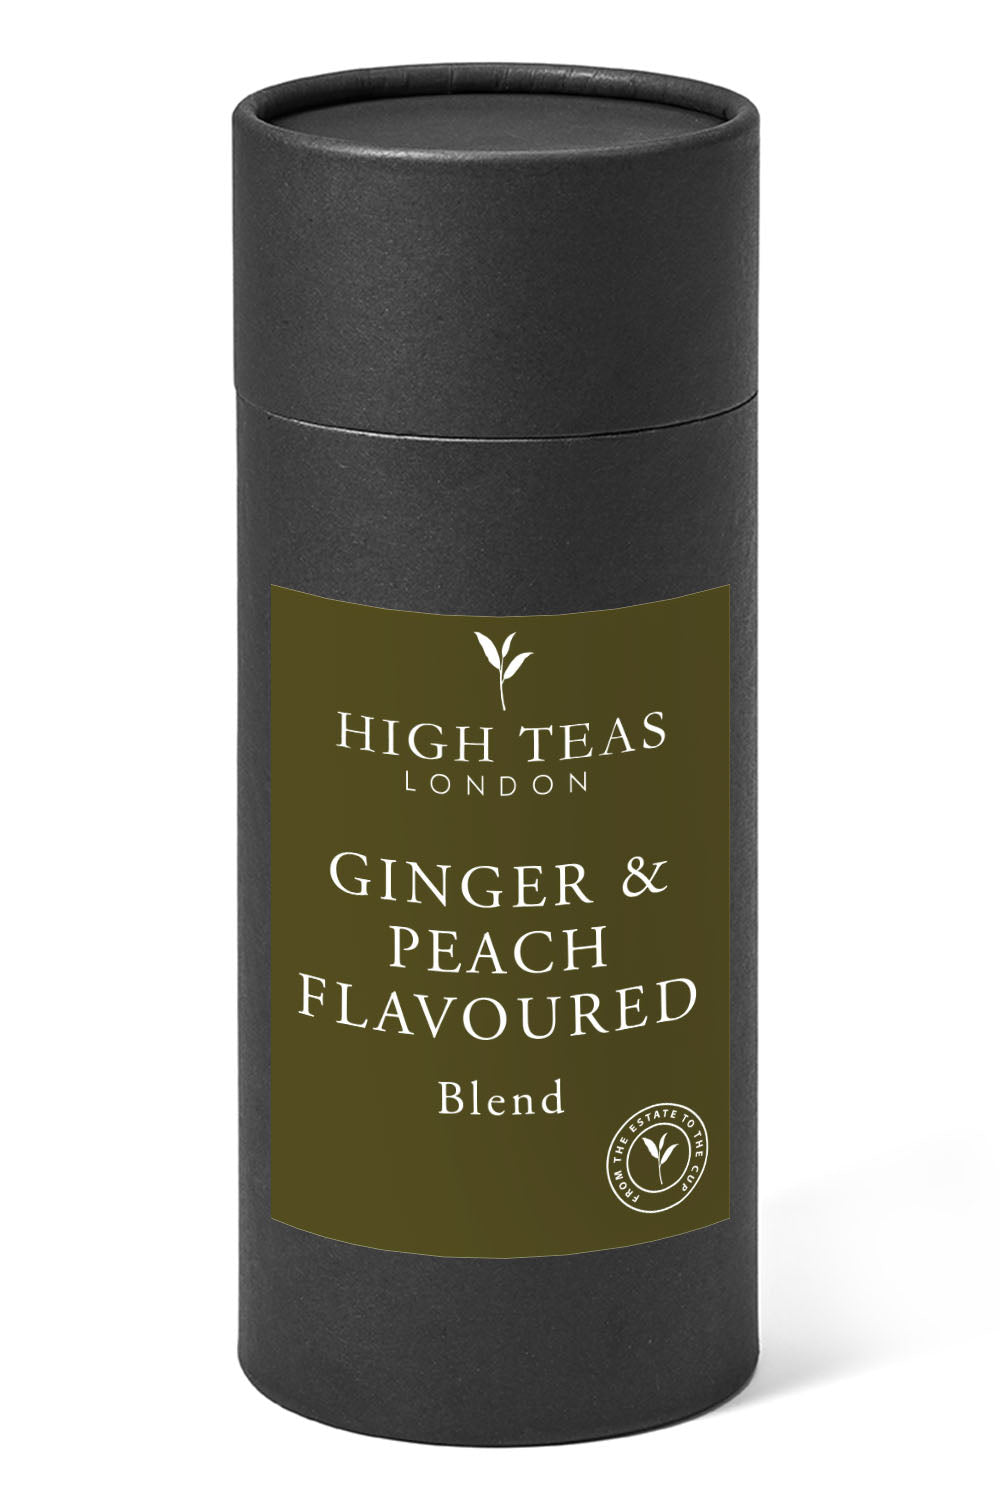 Ginger & Peach flavoured black tea-150g gift-Loose Leaf Tea-High Teas